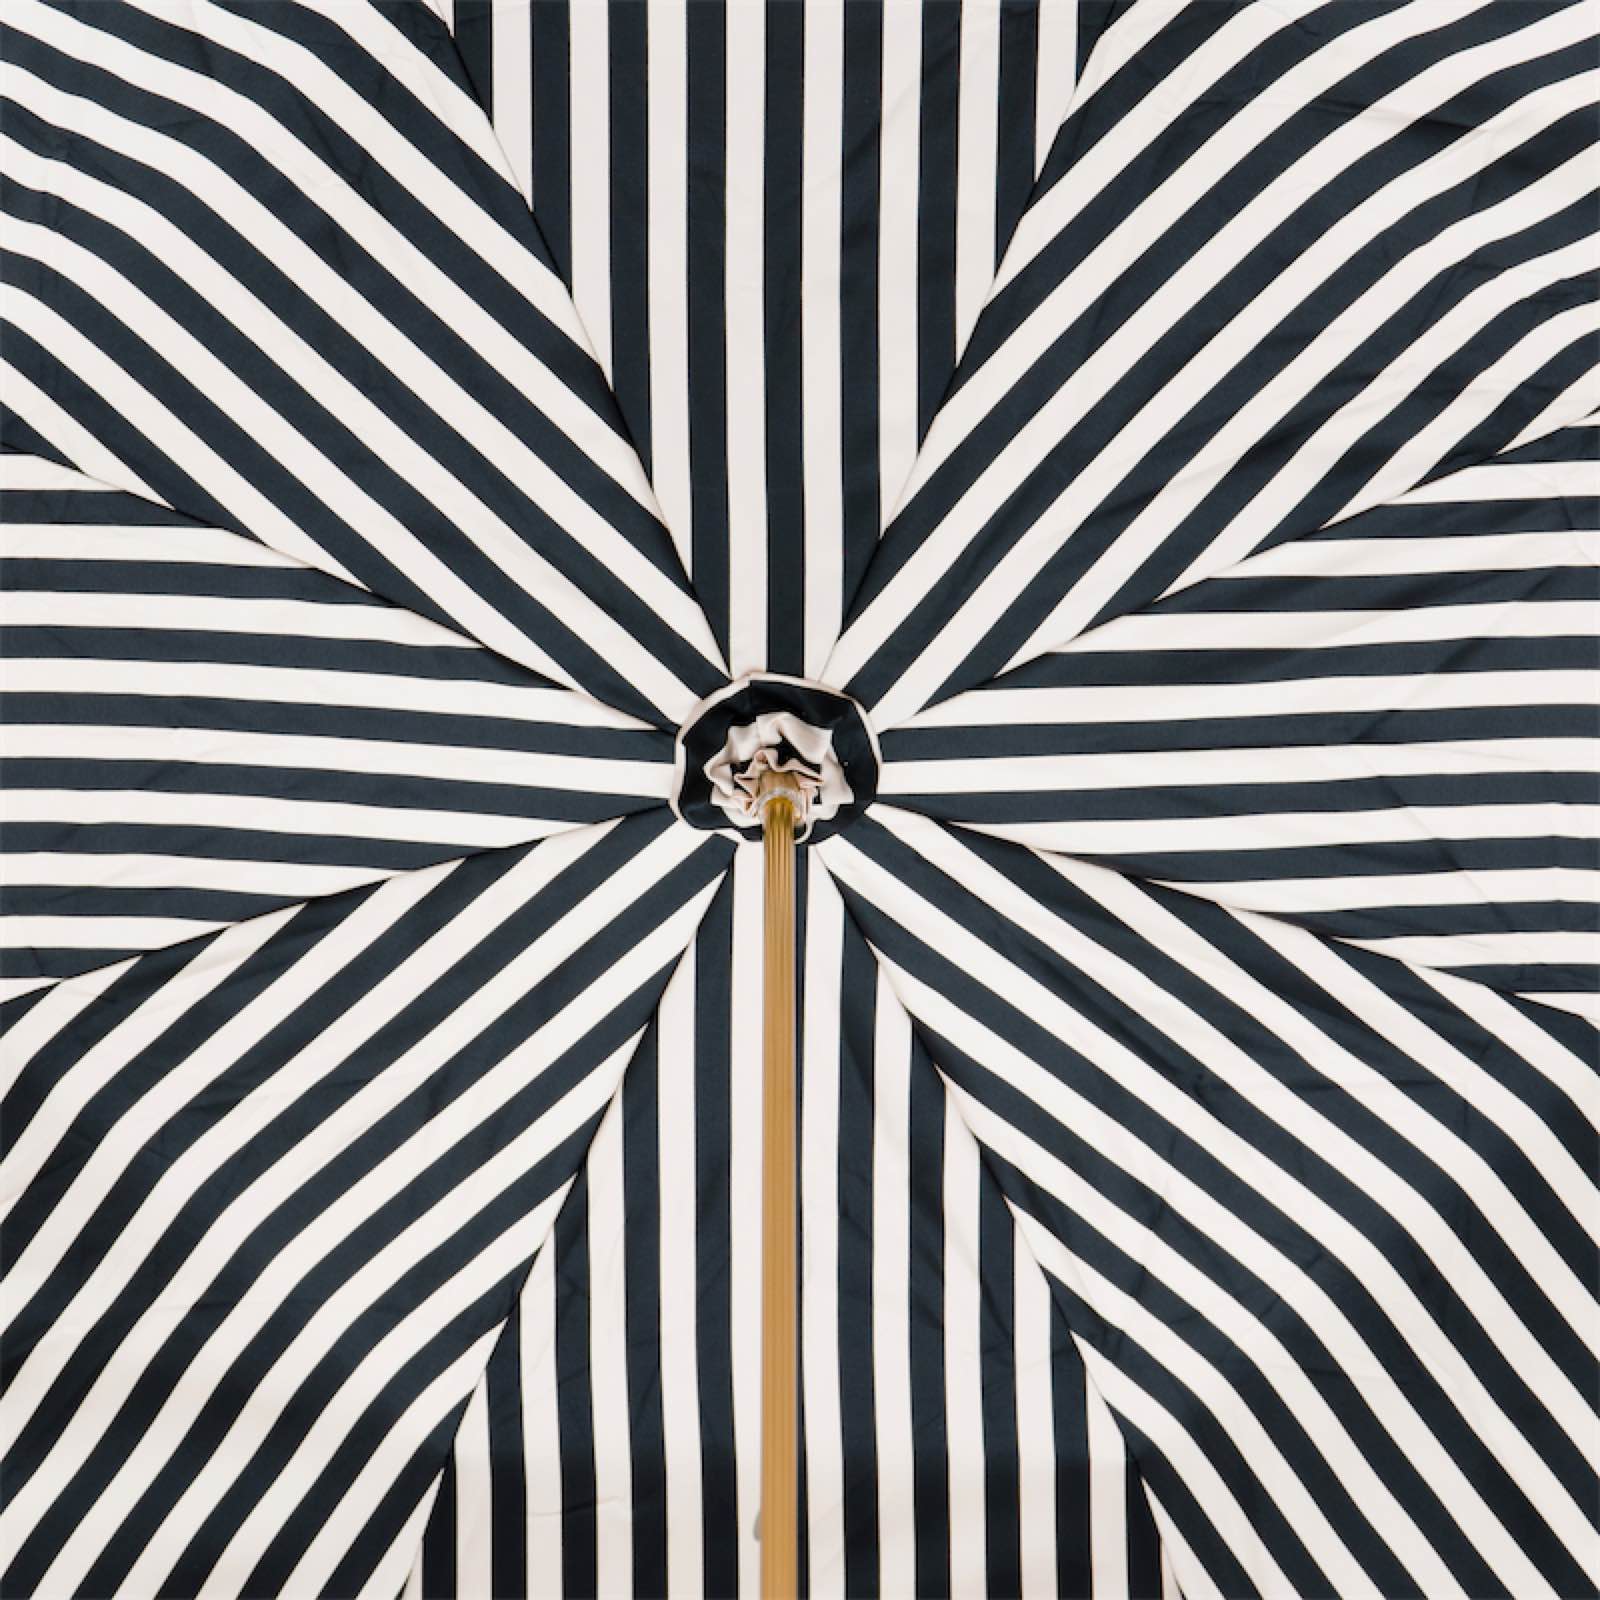 Ivory Umbrella with Black Stripes